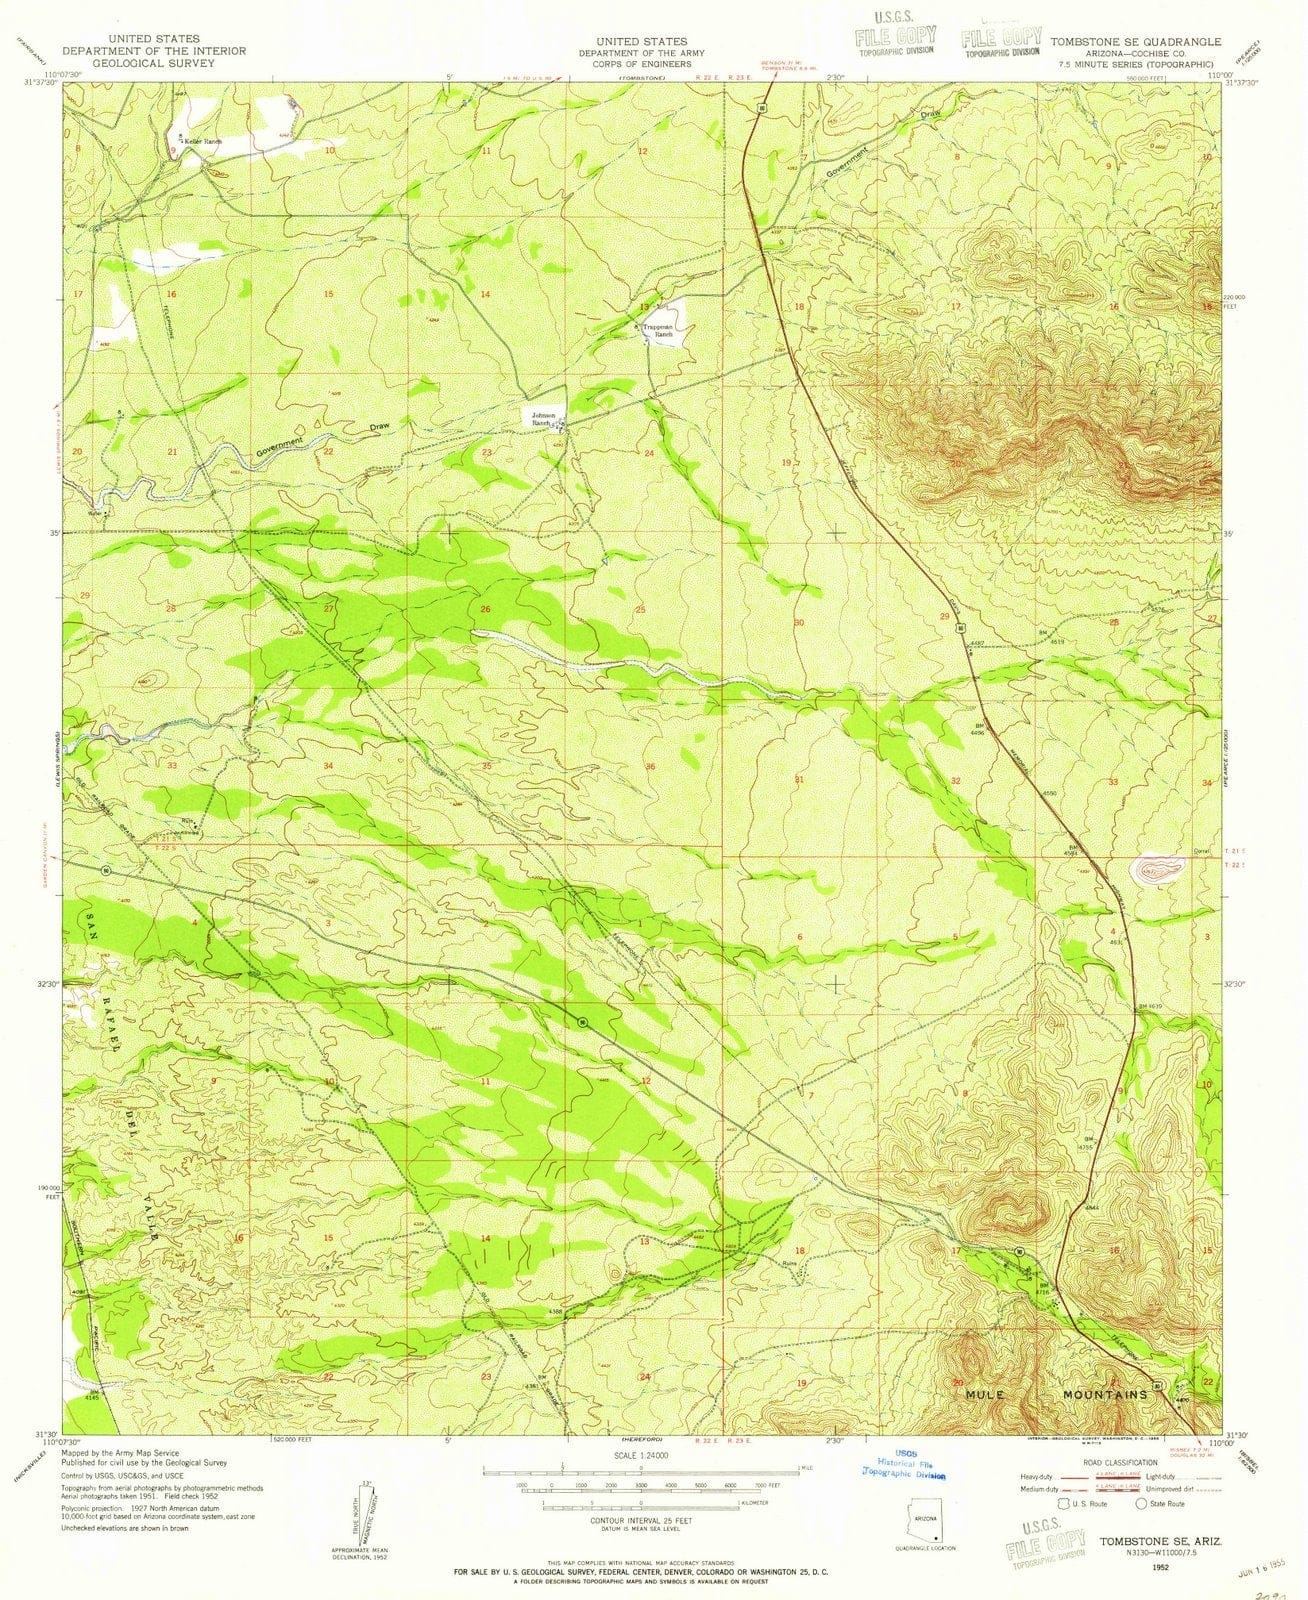 1952 Tombstone, AZ - Arizona - USGS Topographic Map v2